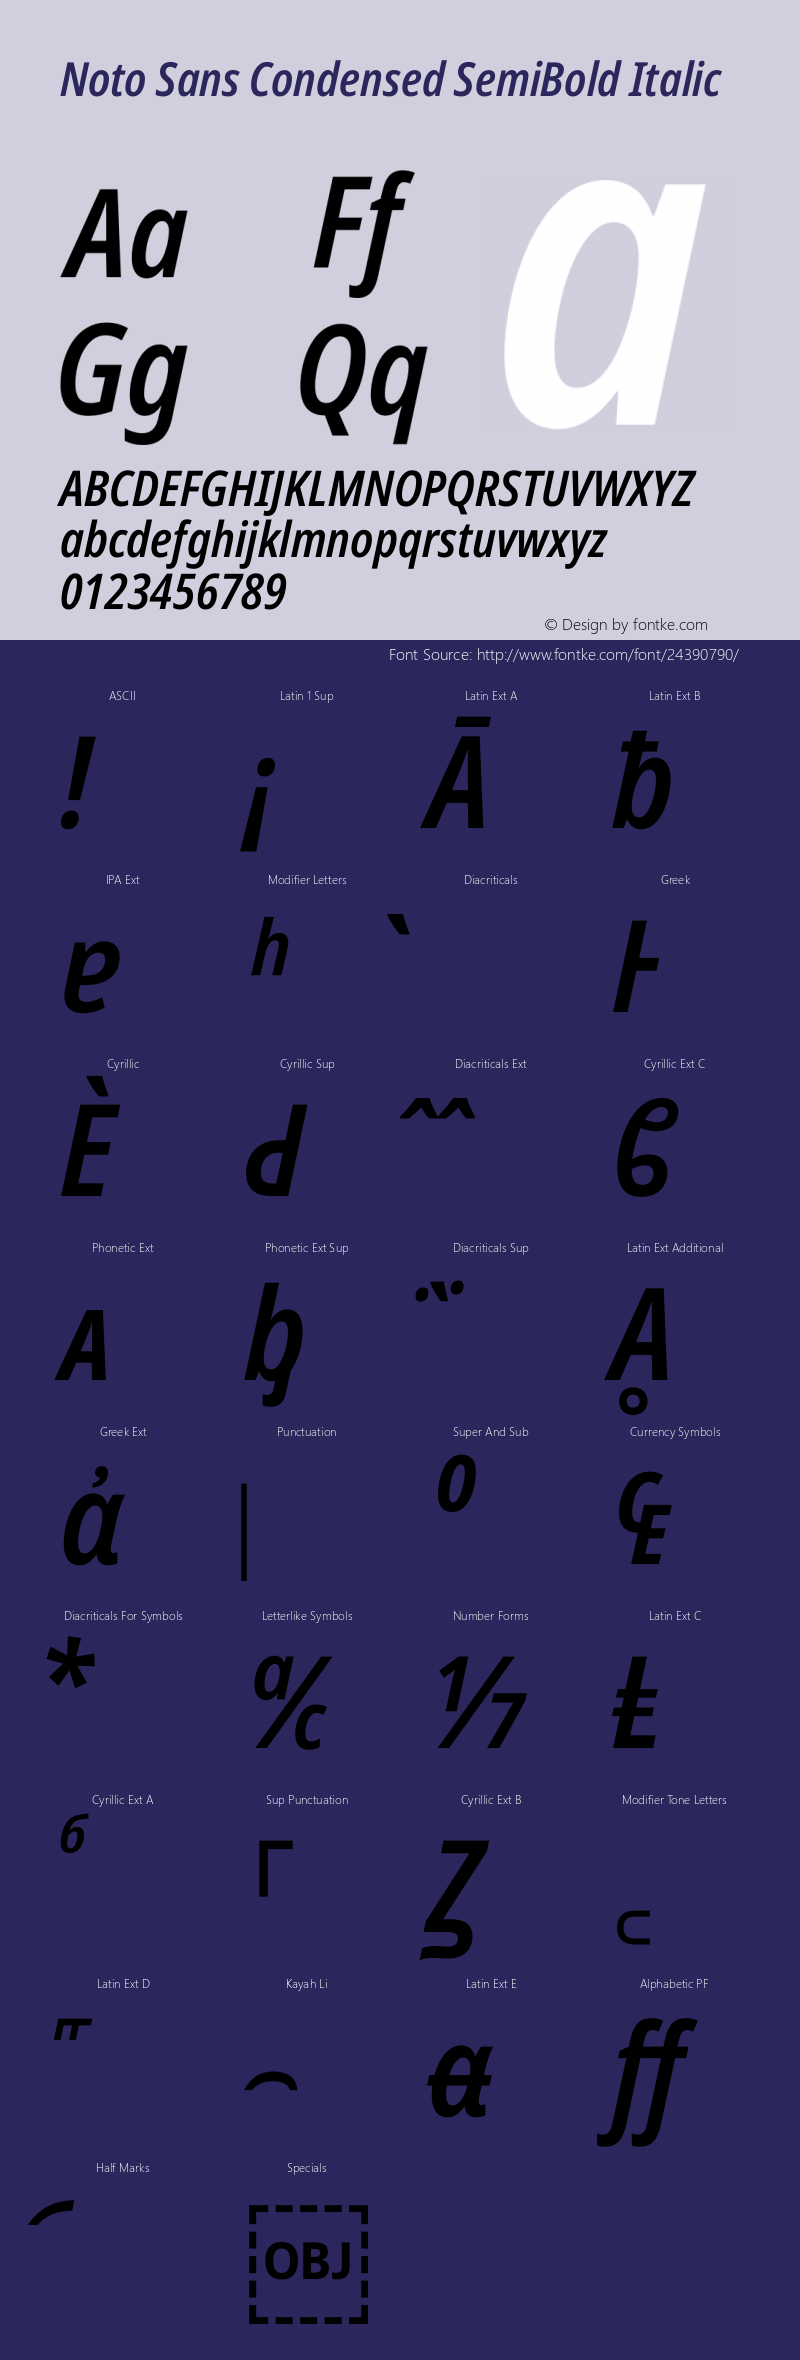 Noto Sans Condensed SemiBold Italic Version 2.000 Font Sample